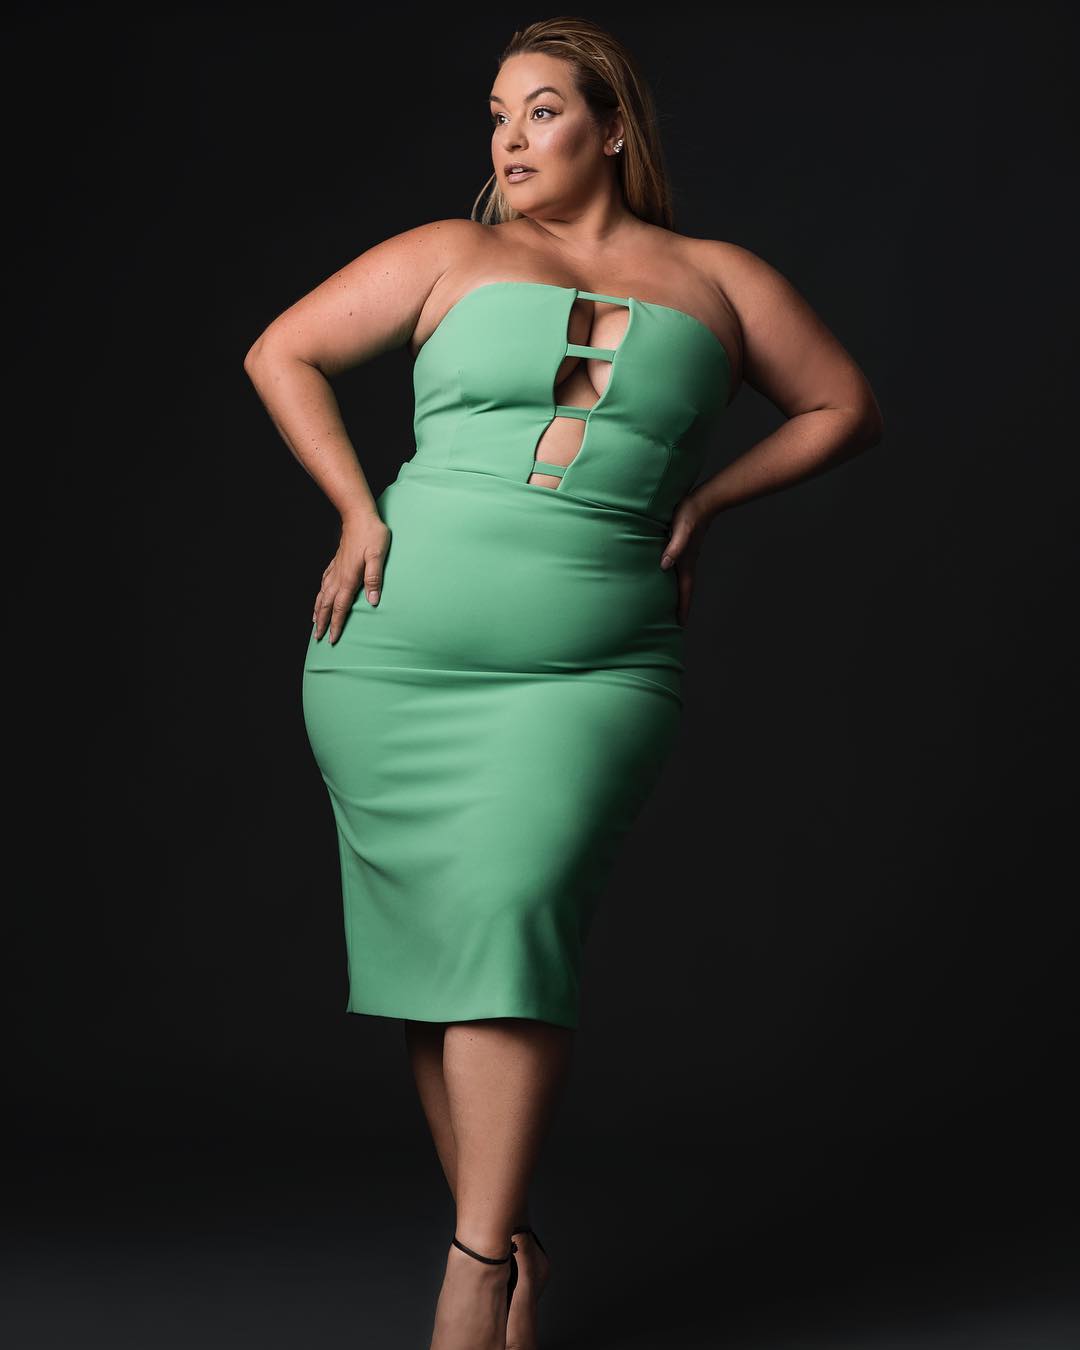 Plus Size Model Laura Lee - The Curvy List